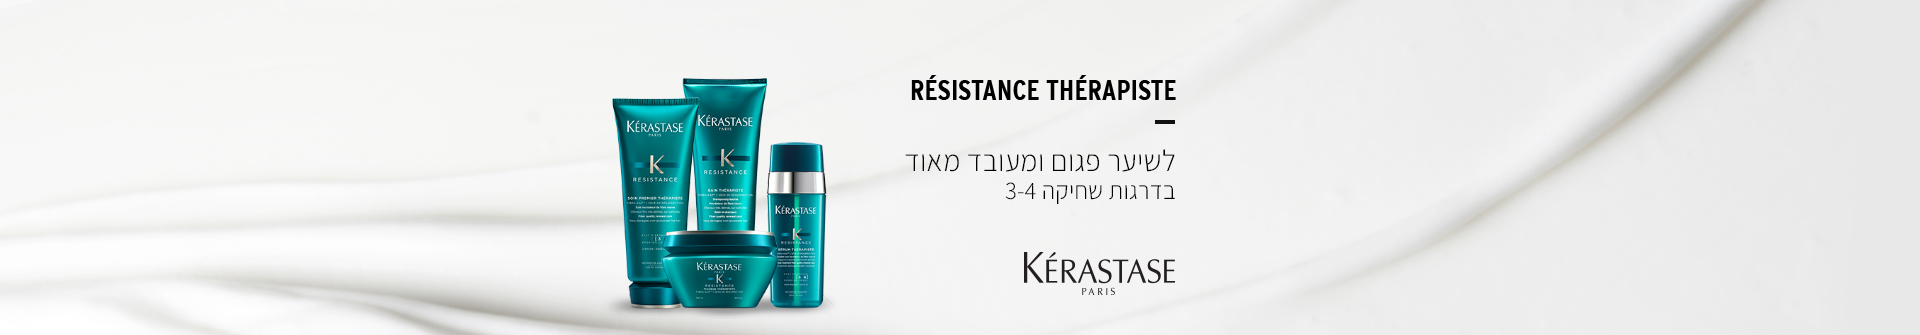 kerastase_1920x335_Resistance Therapiste